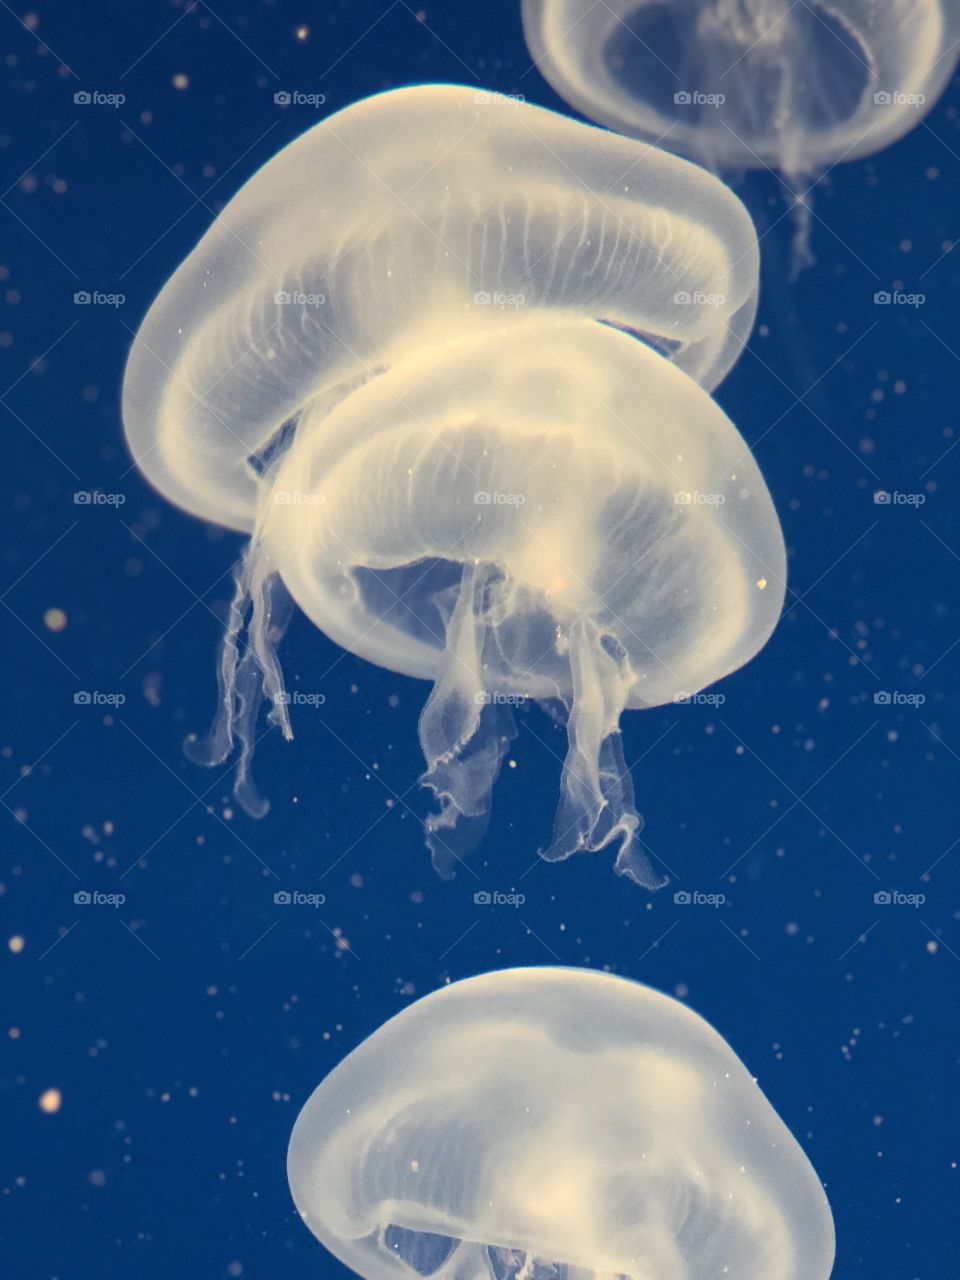 Almost transparent jellyfish 